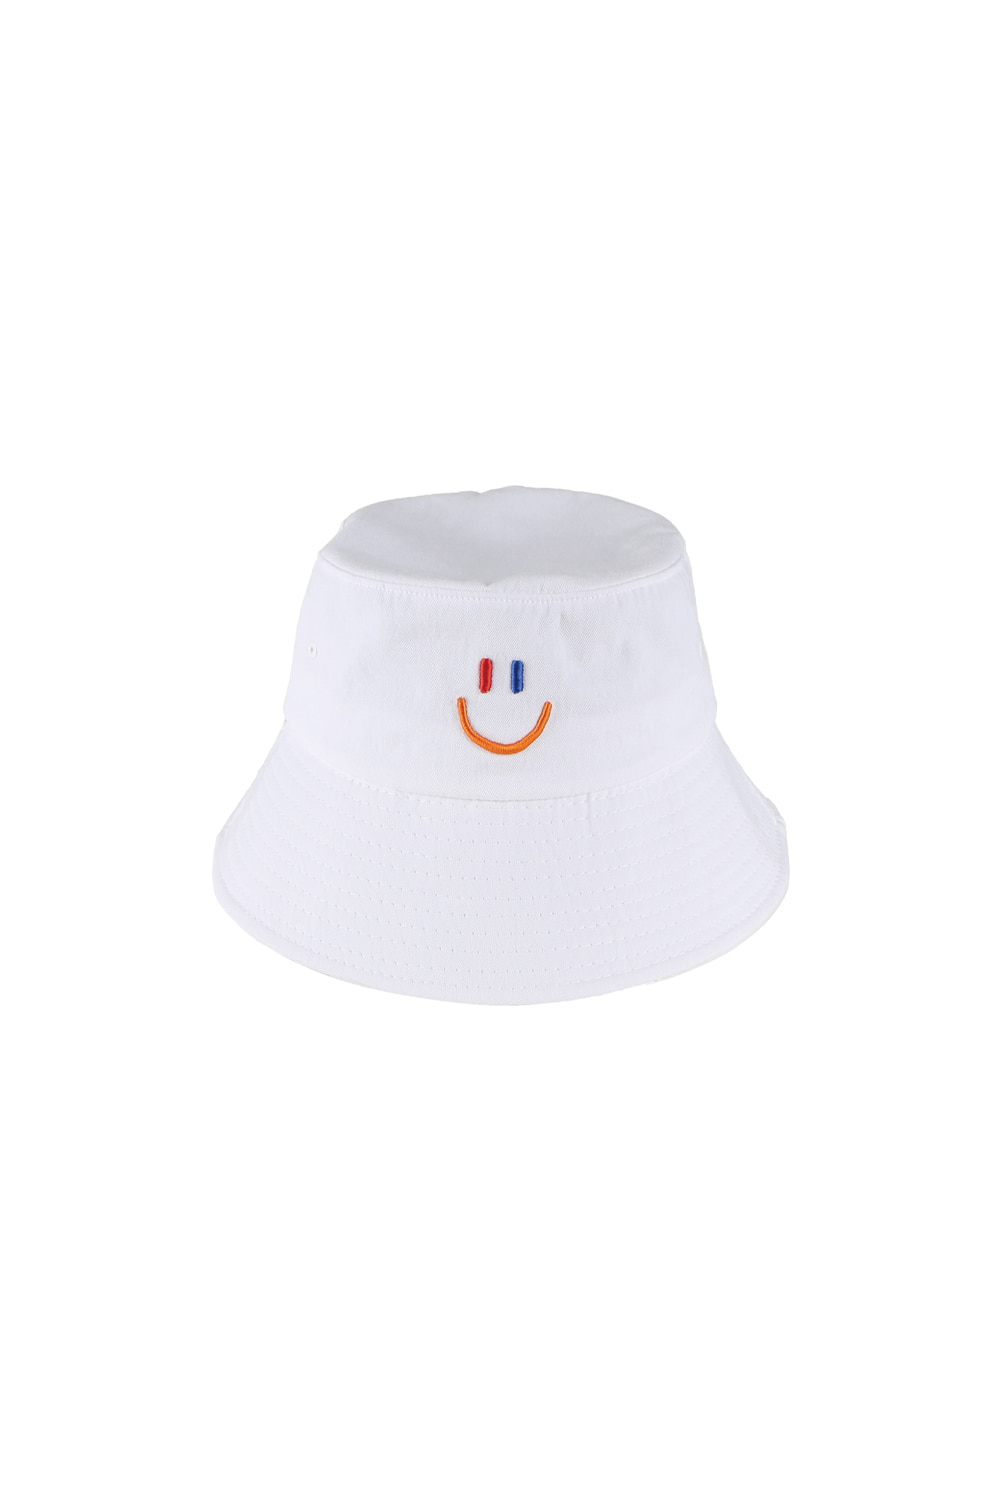 LaLa Cotton Bucket Hat [White]